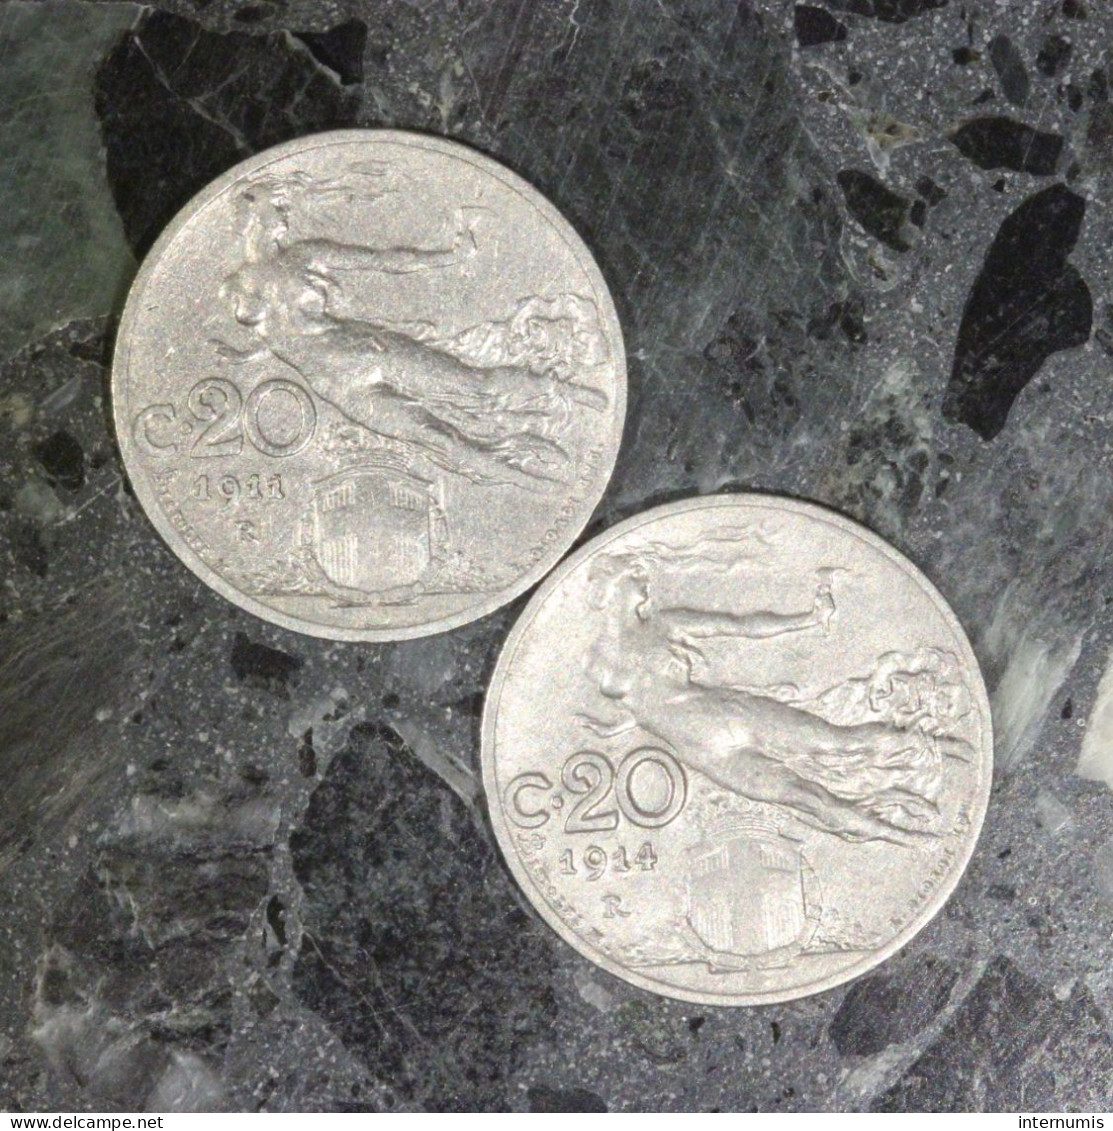 LOT (2) : 2 Centesimi 1911-R & 1914-R Italie / Italy, , 20 Centesimi , 1911 & 1914, , Nickel, ,
KM# - Kiloware - Münzen